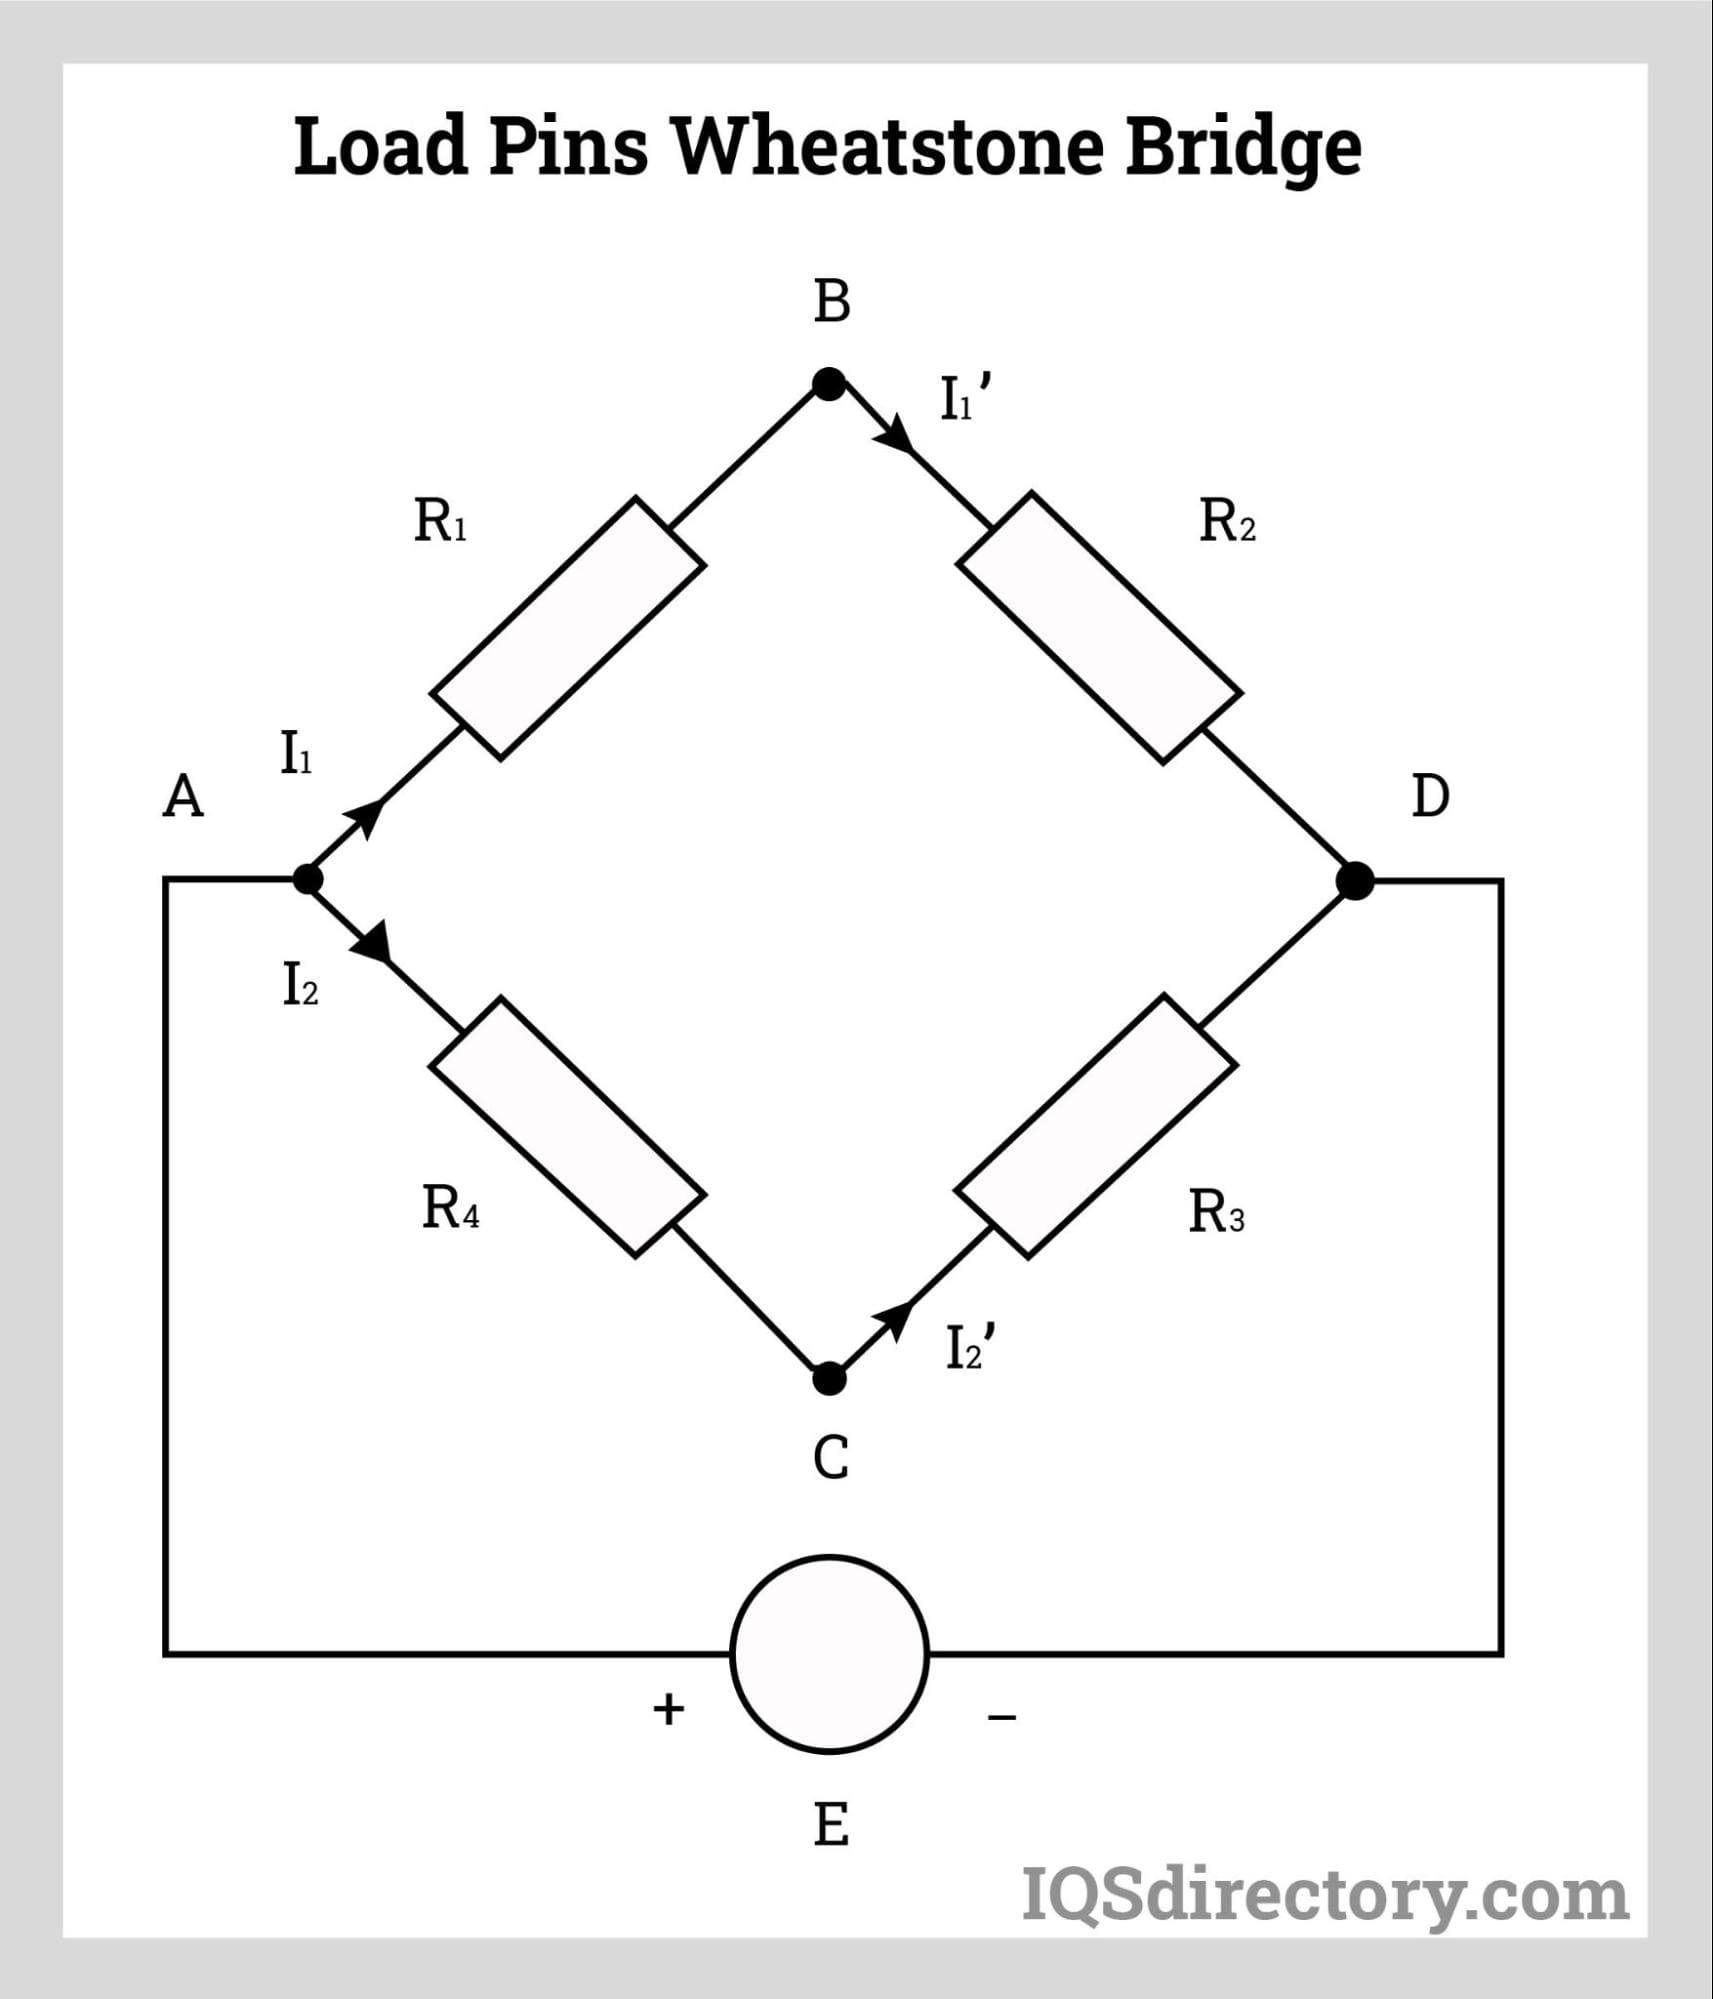 Load Pins Wheatstone Bridge